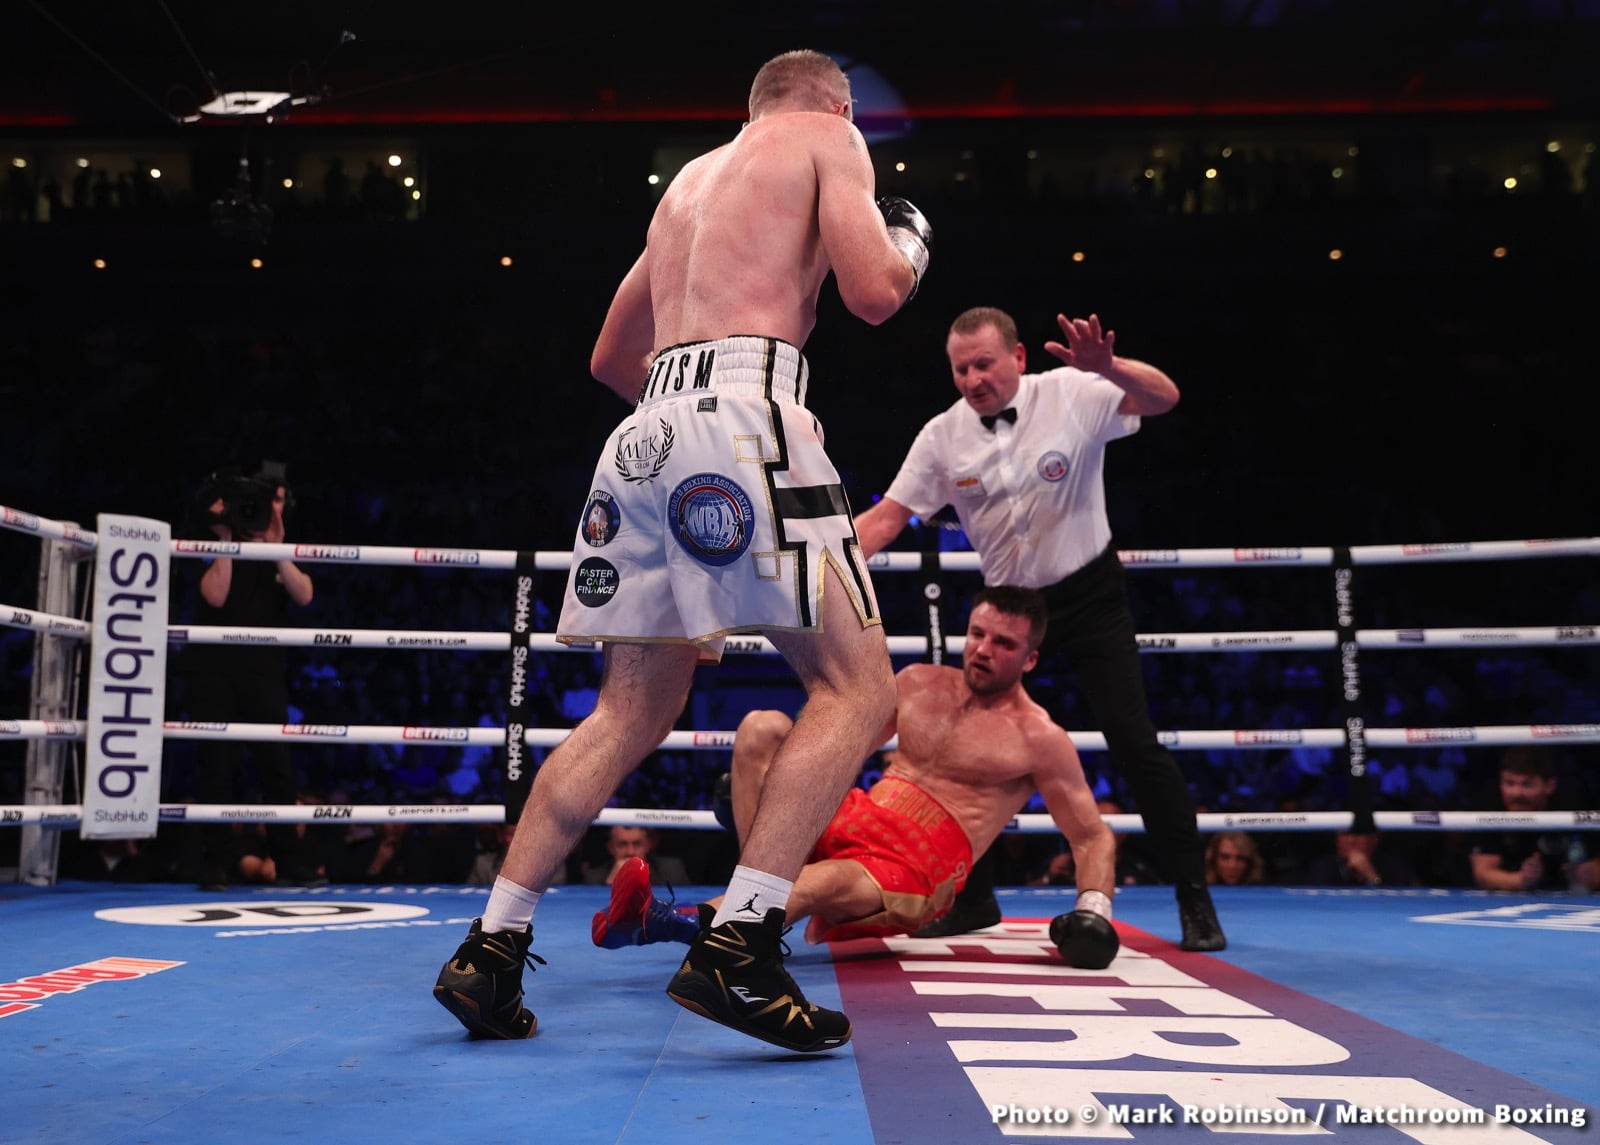 Liam Smith boxing image / photo